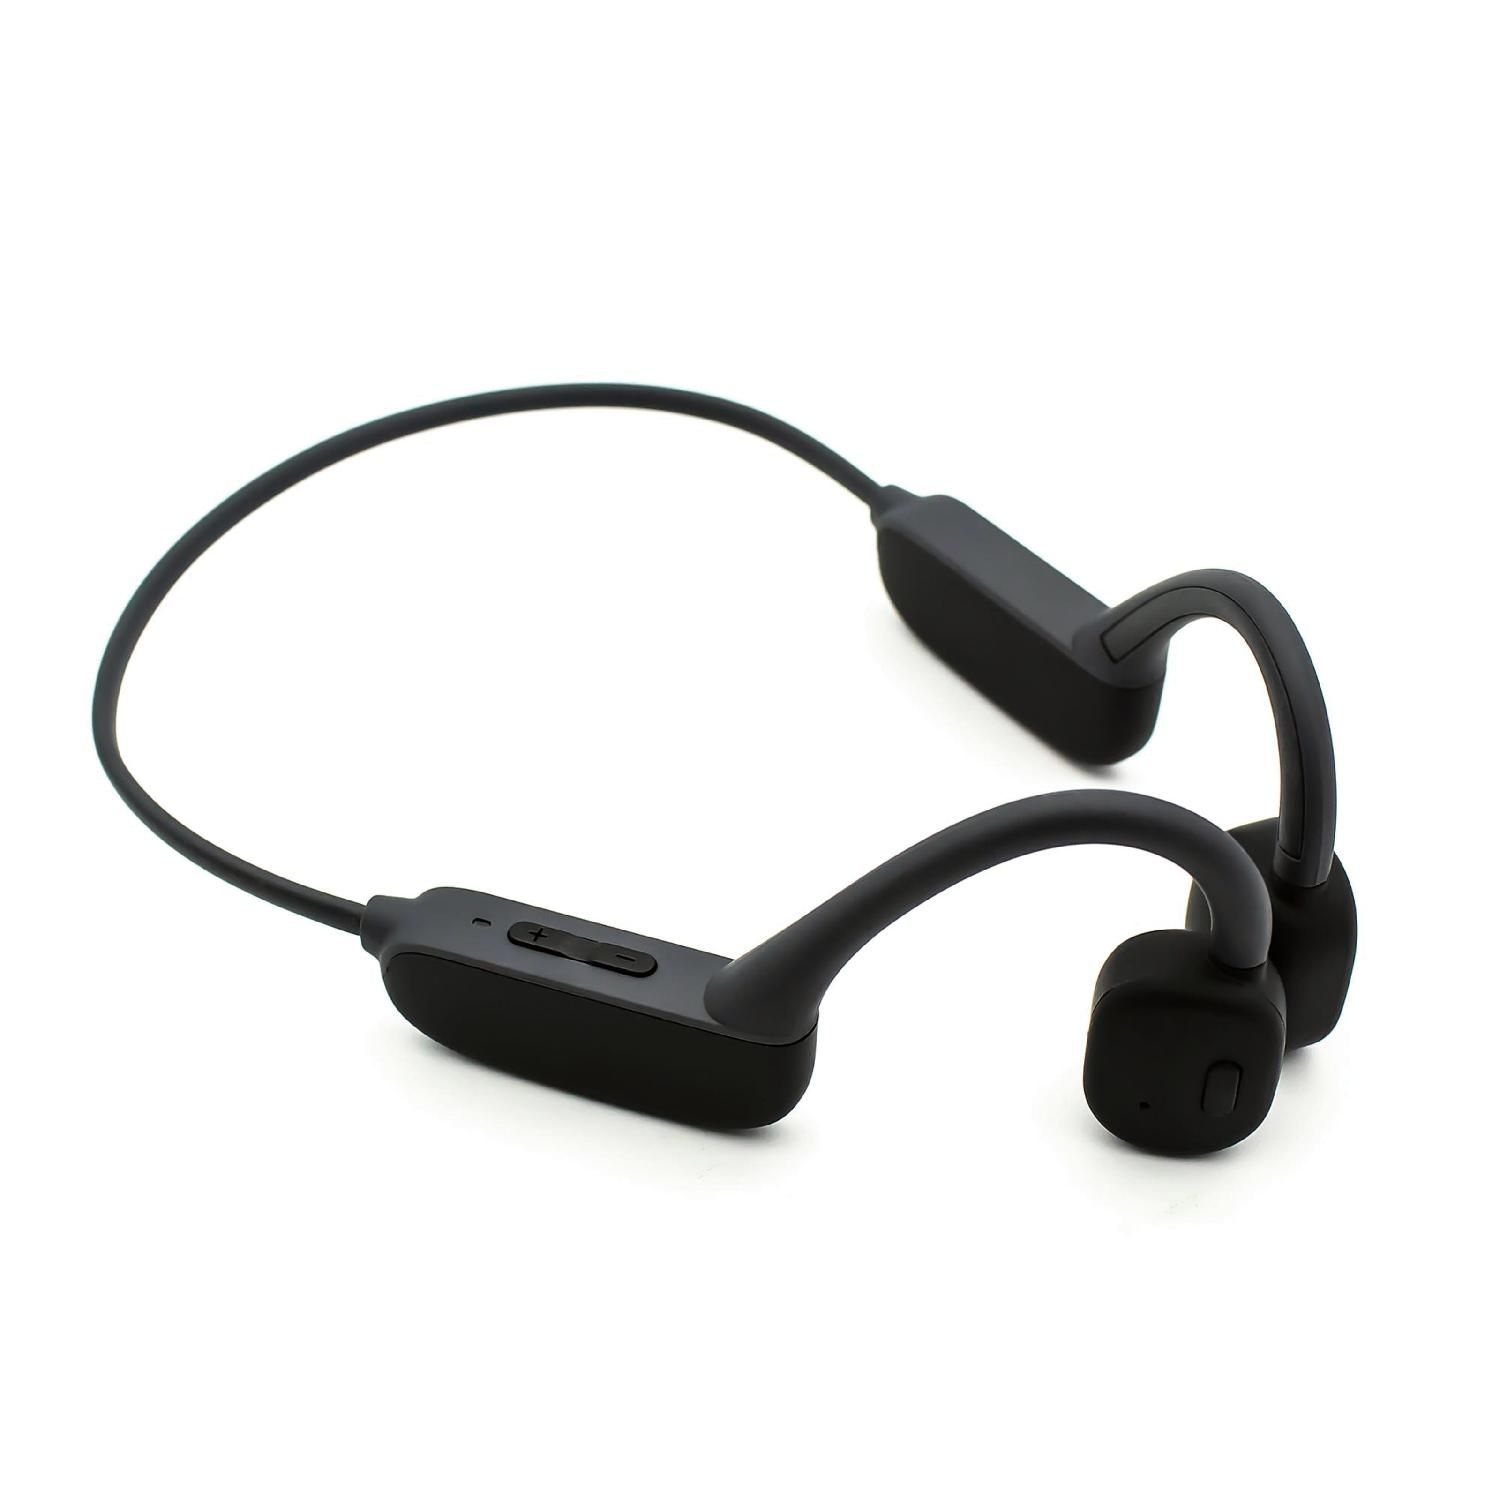 schwarz active 2, IMPERIAL bluTC Neckband Headset